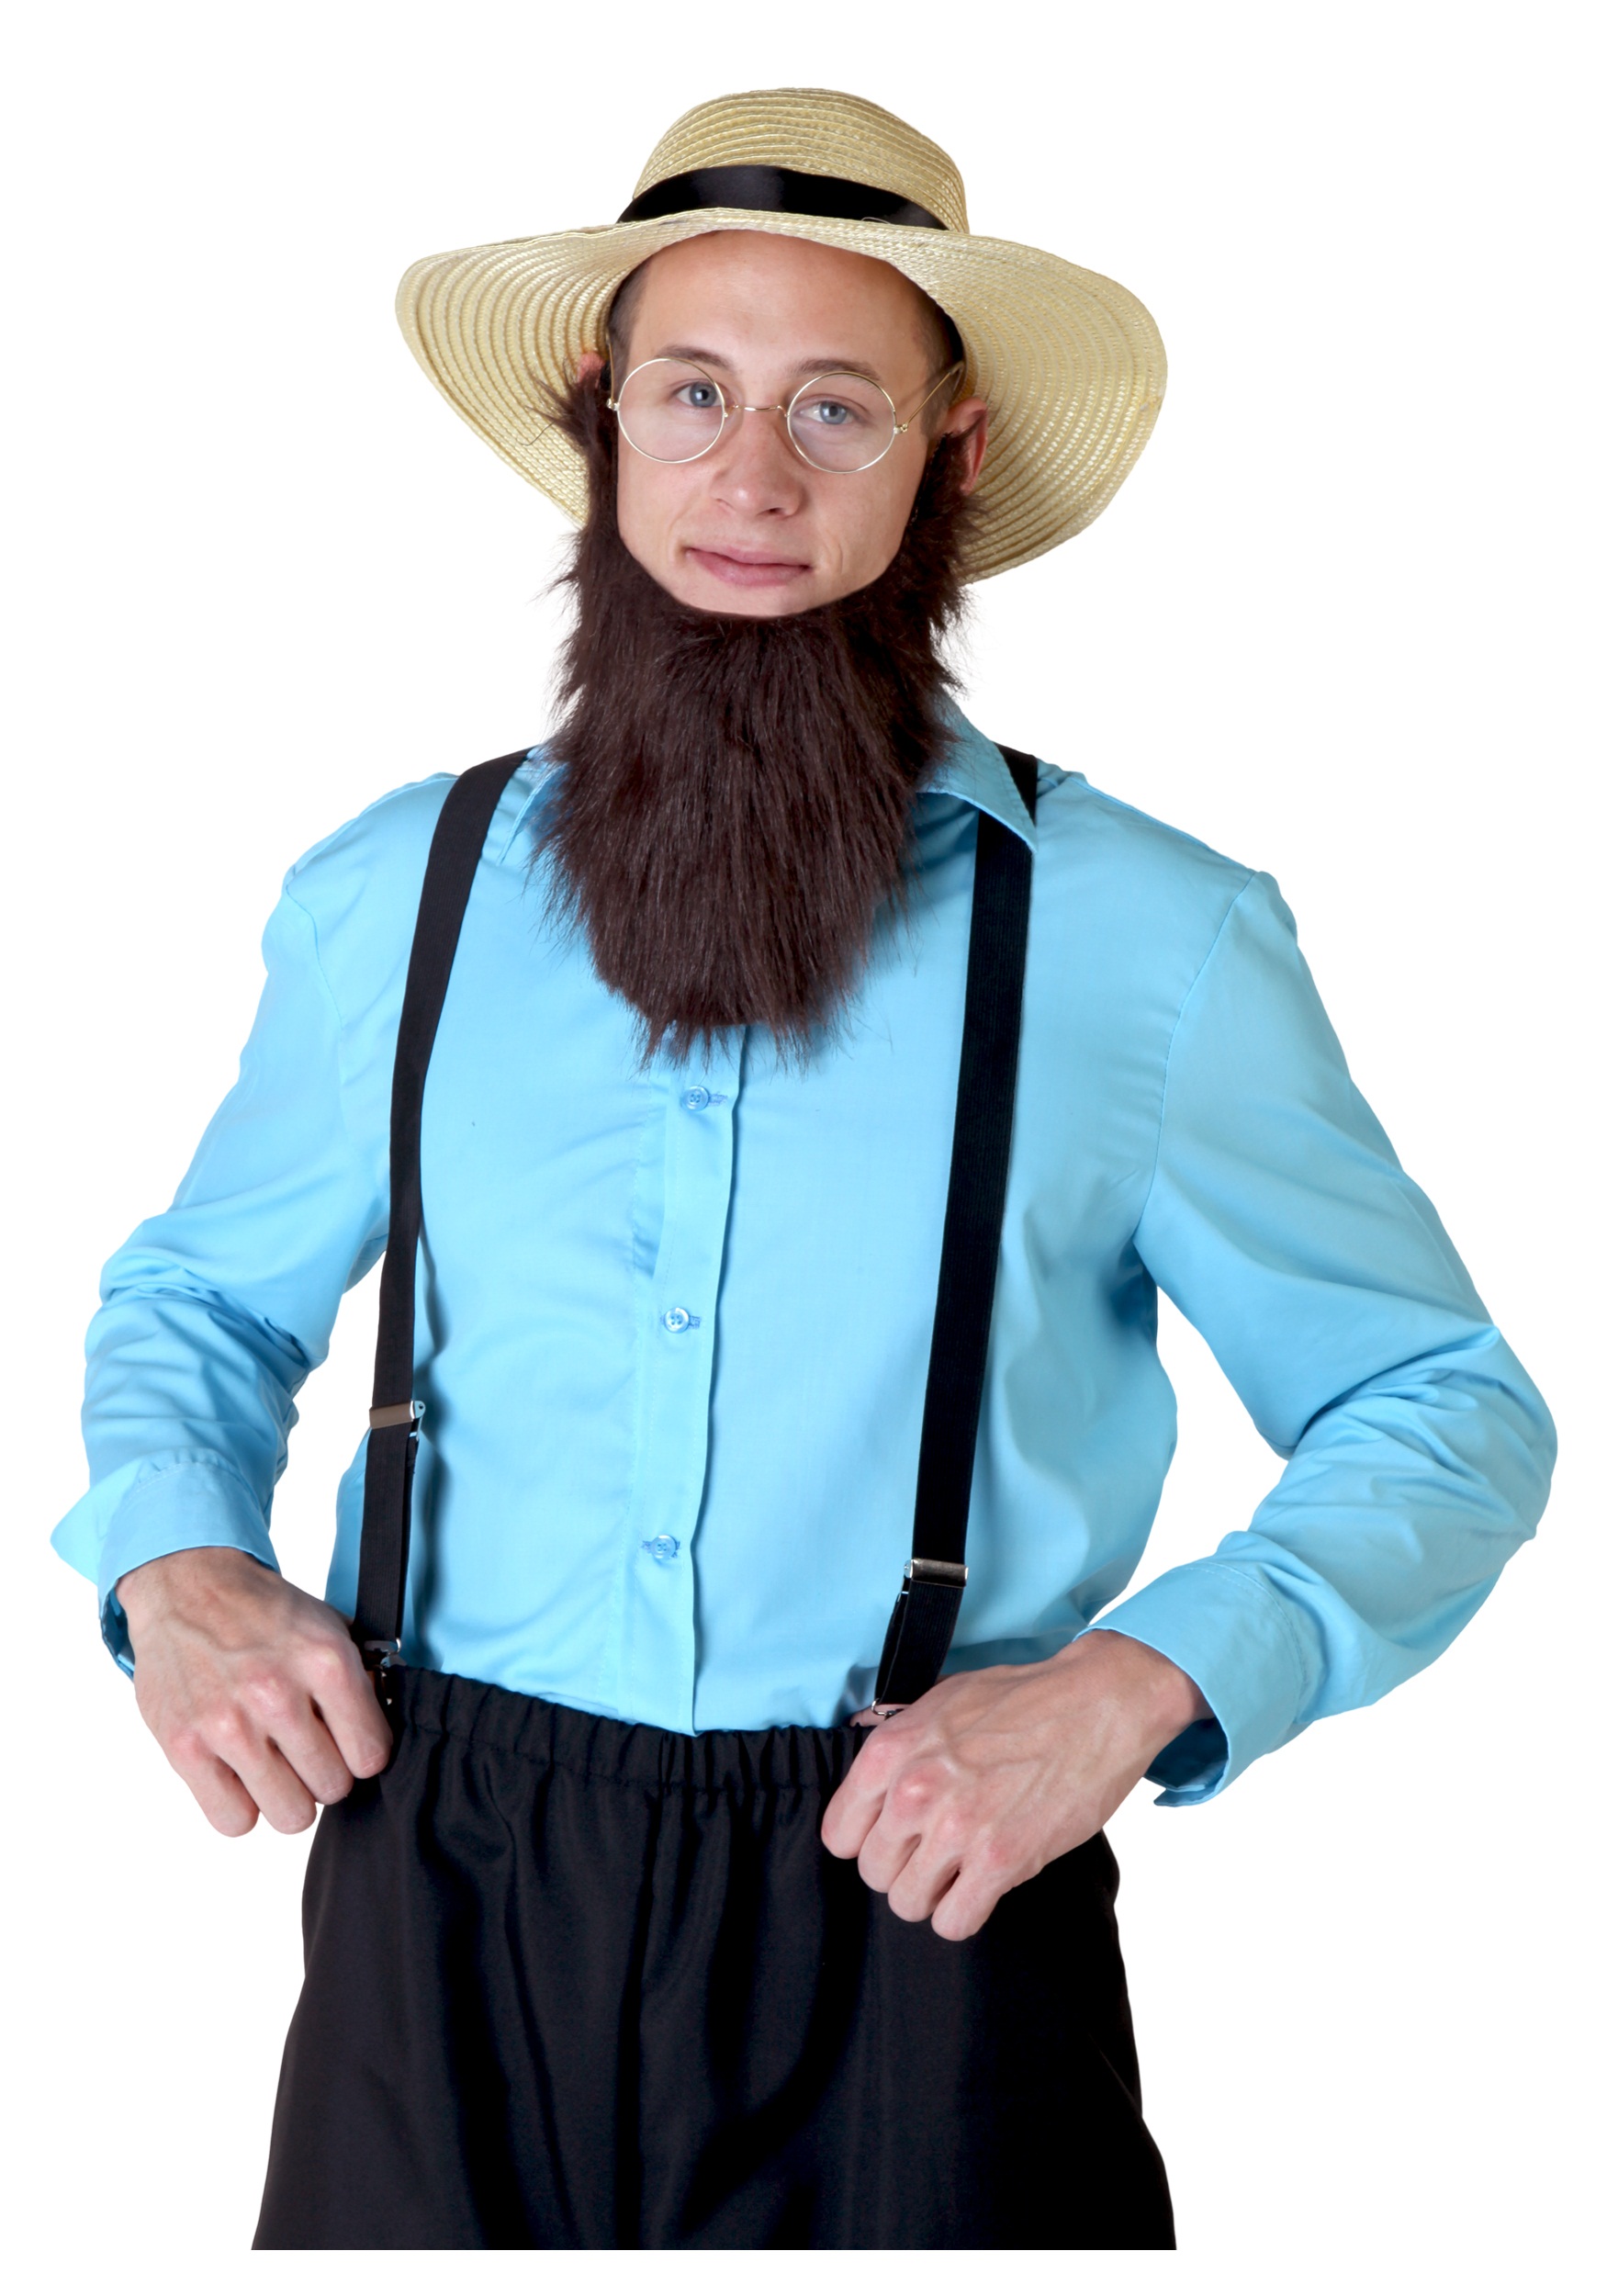 shave job mini Amish Man Costume - Halloween Costume Ideas 2022